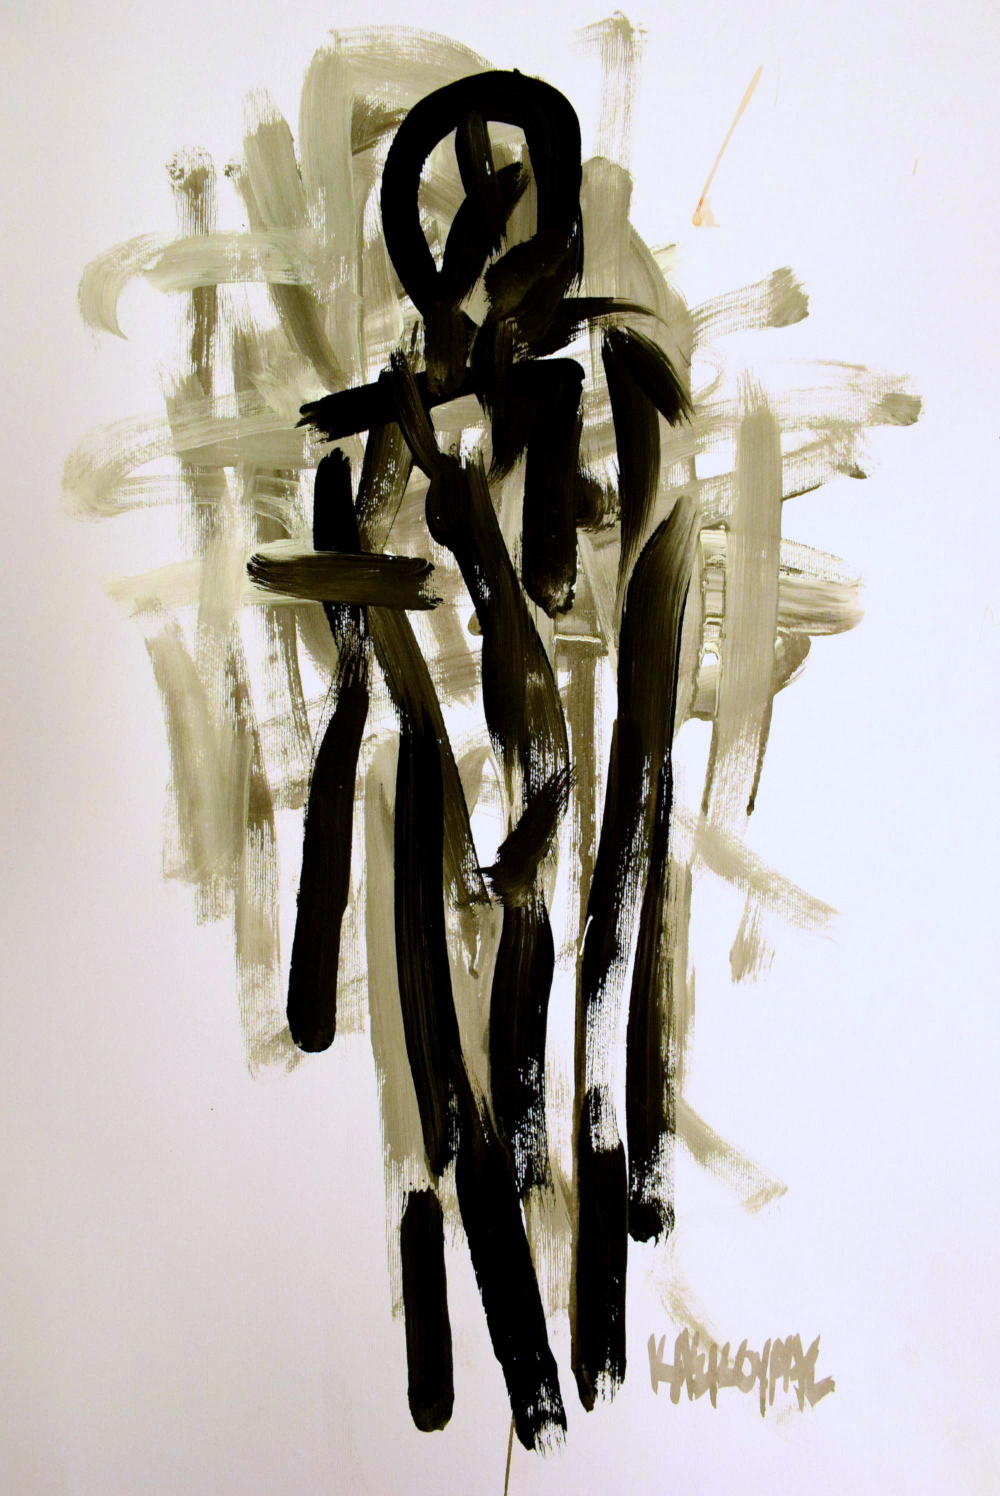 Human, Acrylics on paper, 35 x 50 cm, 2019